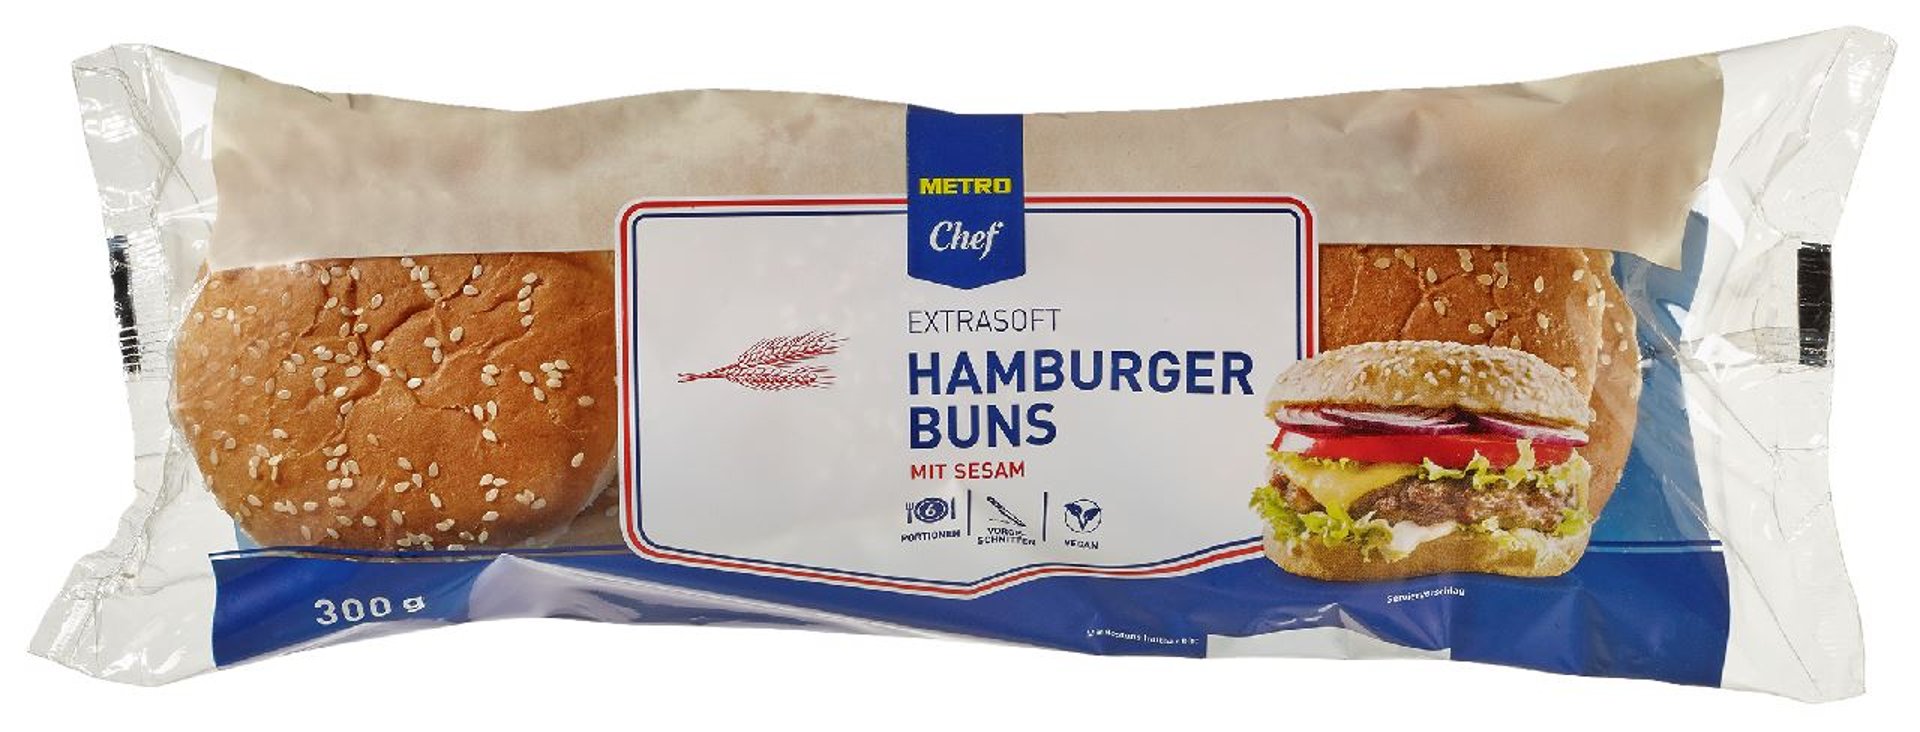 METRO Chef - Hamburger Buns Sesam 6 Stück à 50 g - 300 g Packung